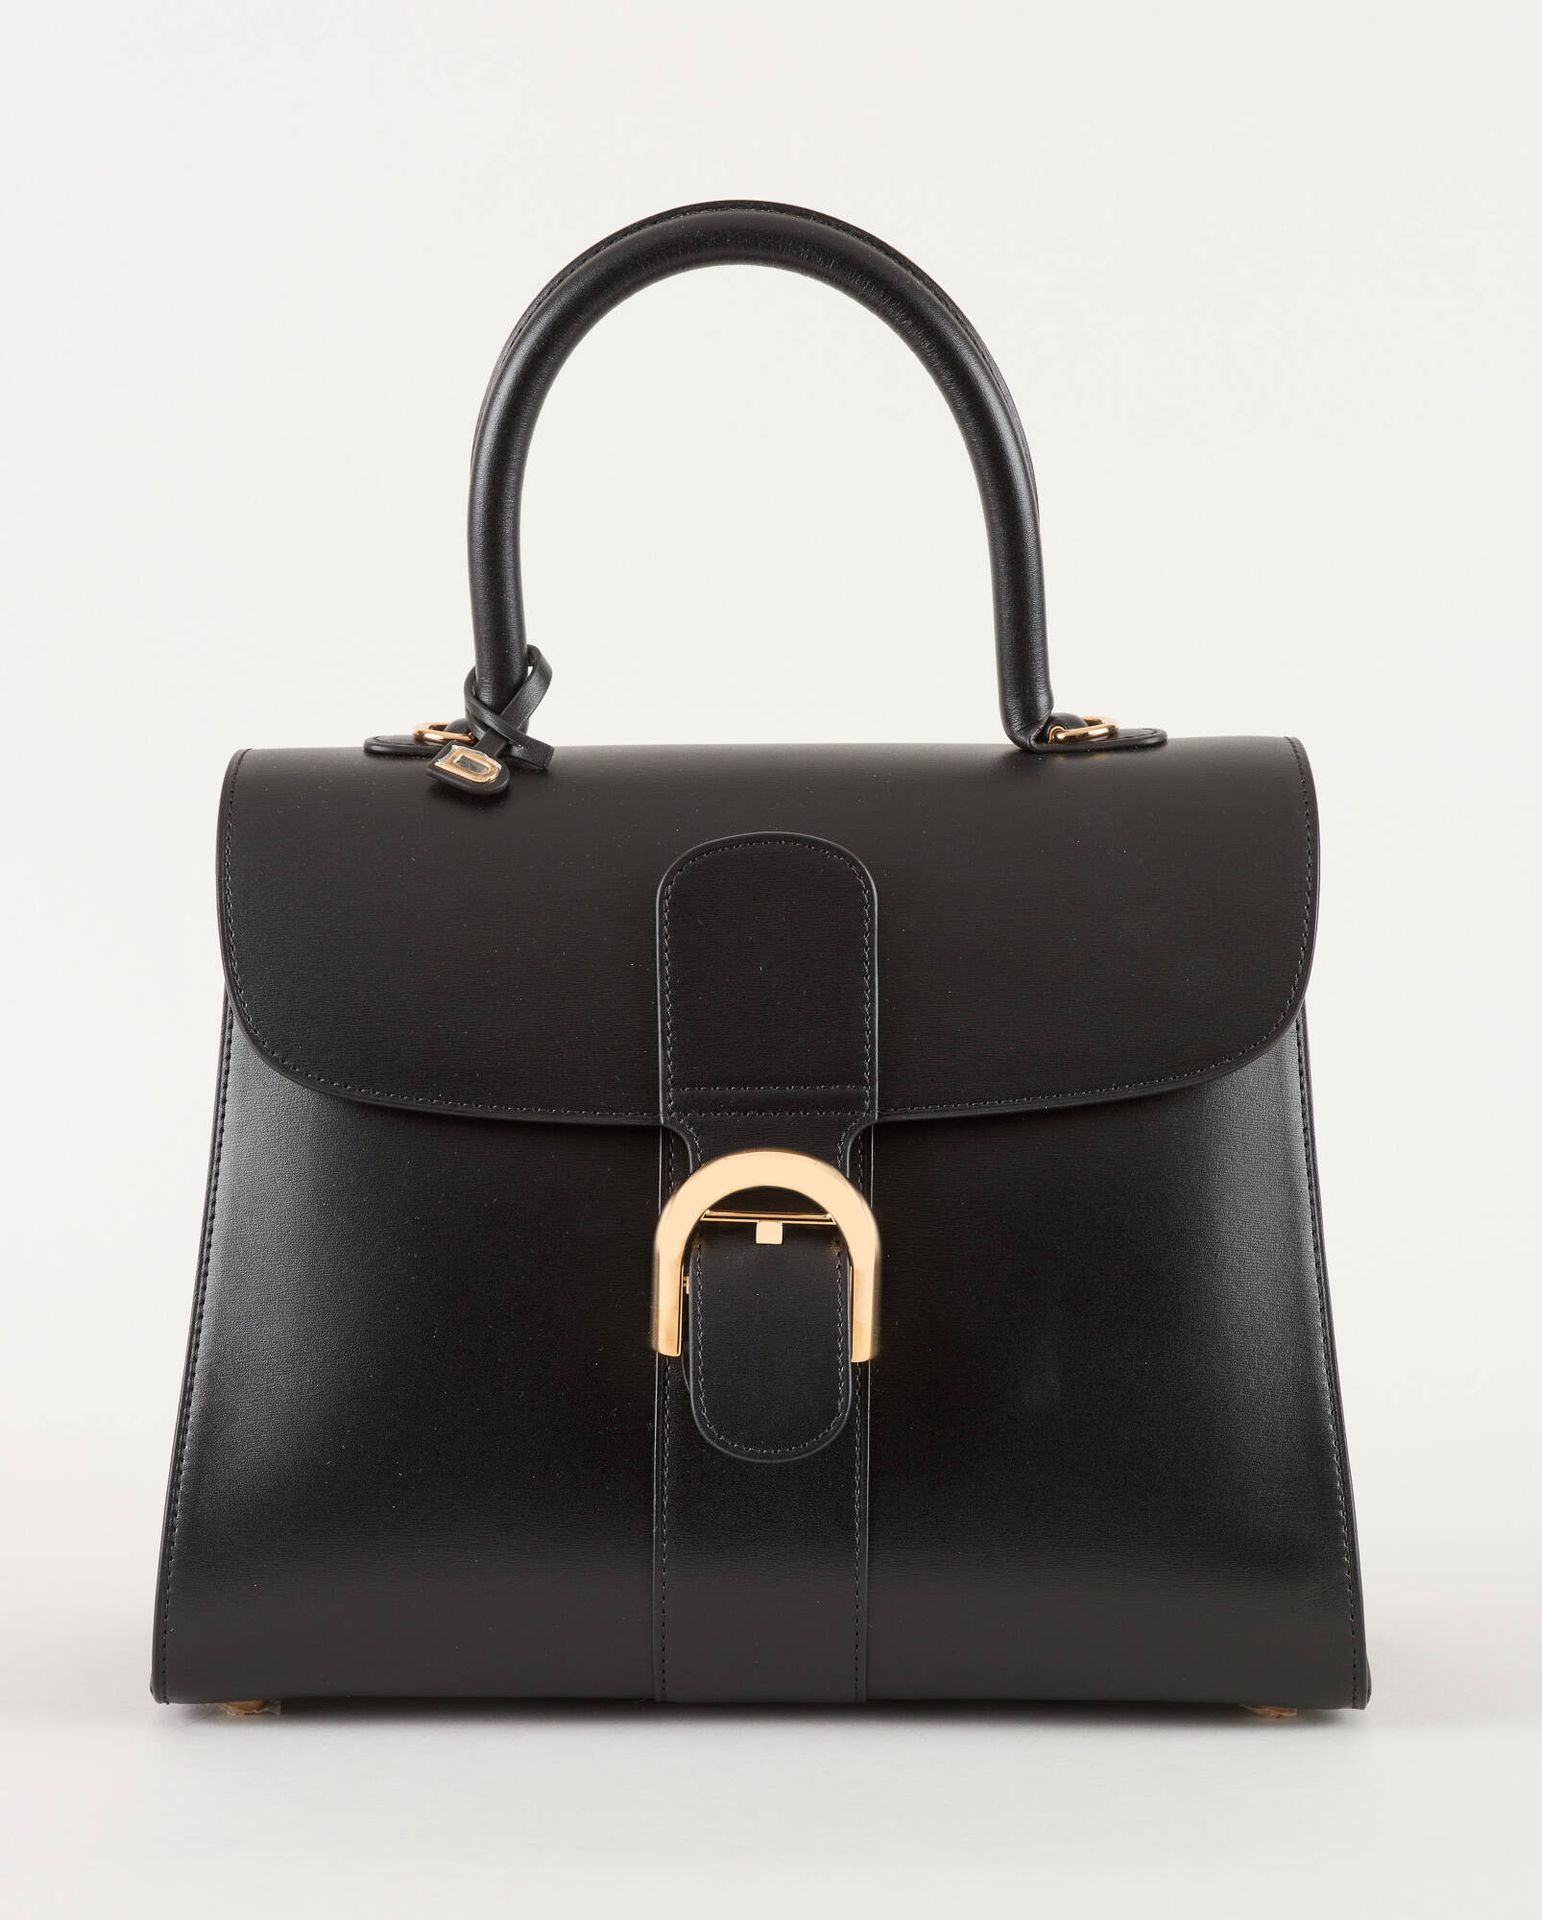 Delvaux. Leather goods: Black leather handbag, mint condition.
Delvaux brand, "B&hellip;